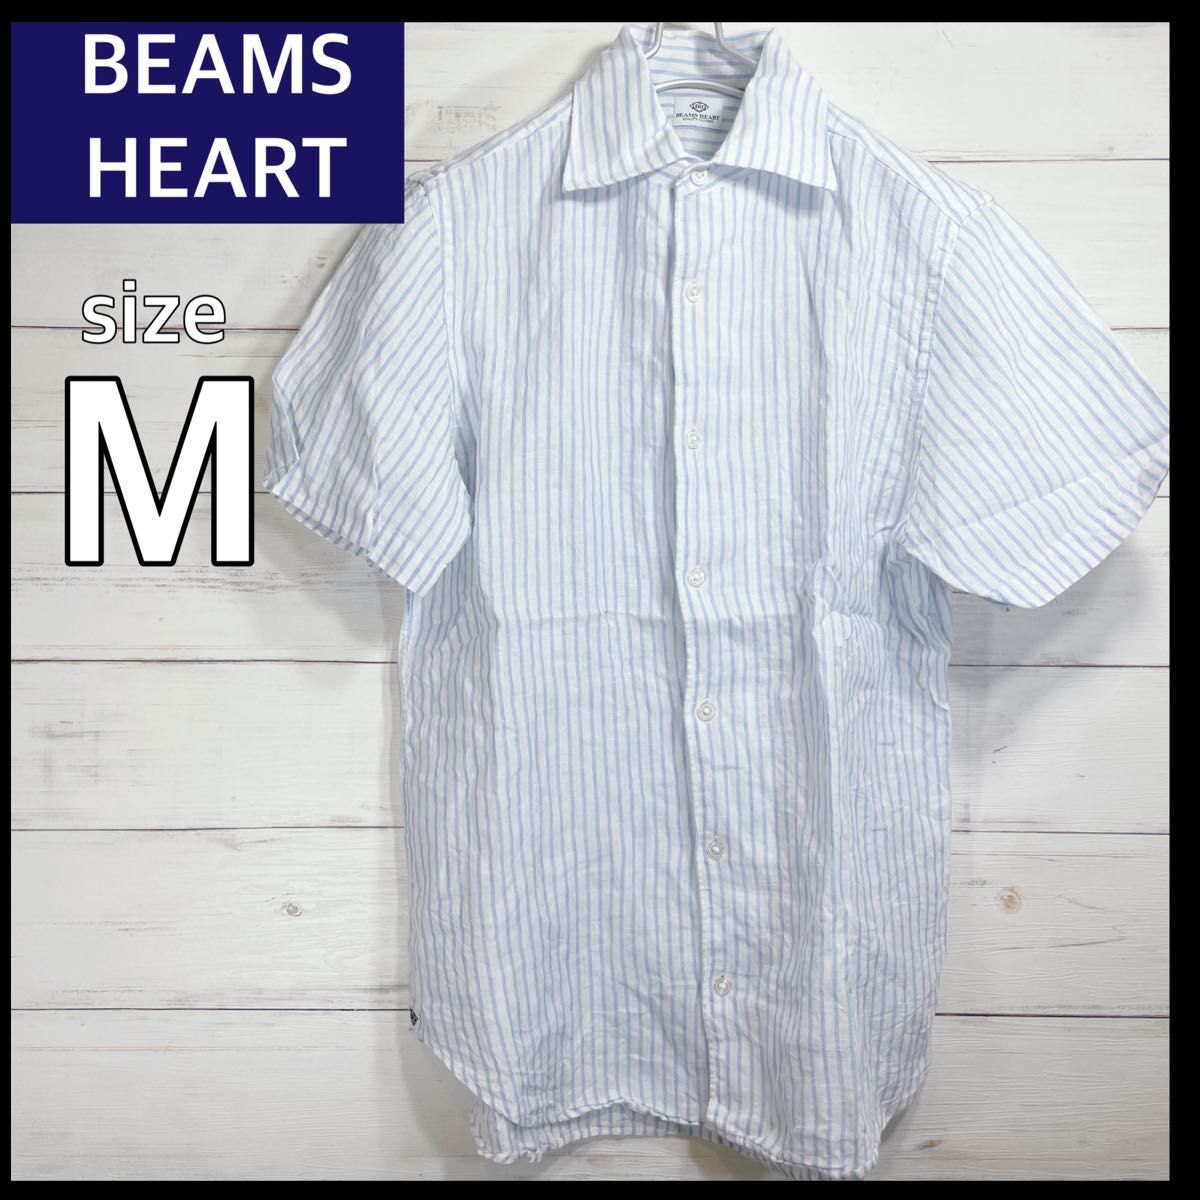 BEAMS HEART メンズ ストライプ柄 半袖シャツ リネン 麻100% M